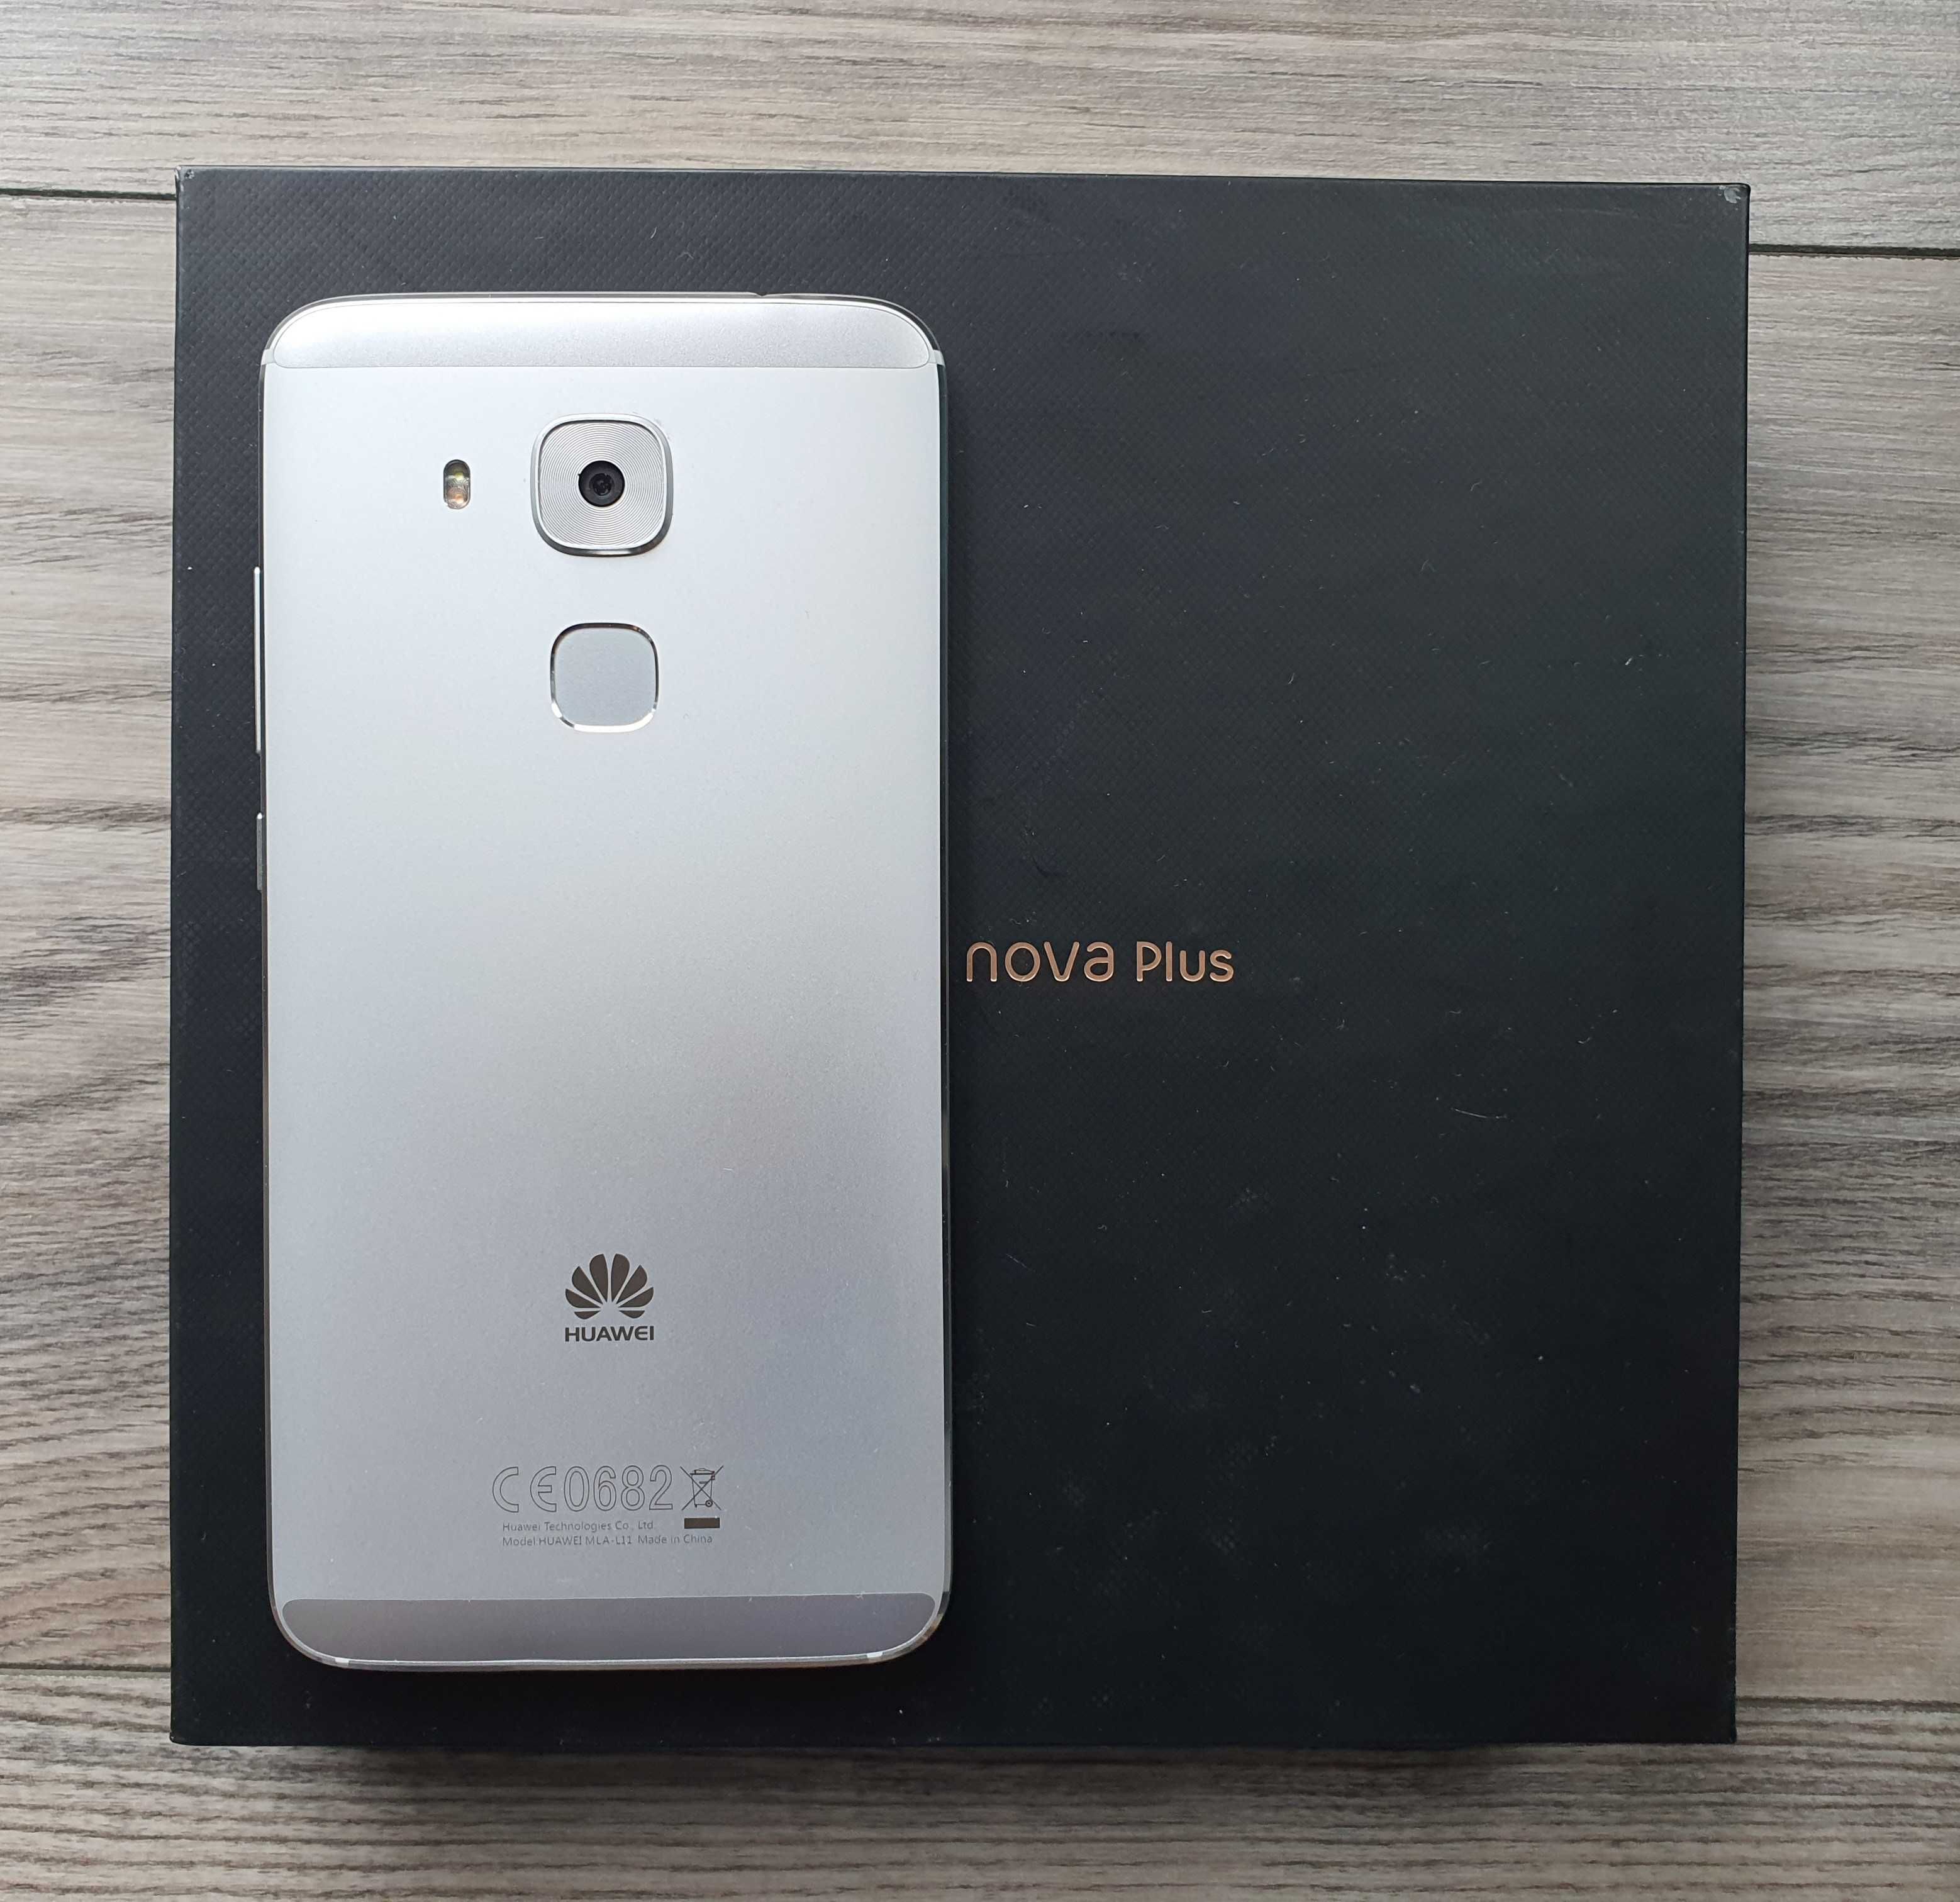 Smukły smartfon Huawei Nova Plus - 3Gb ram, NFC, LTE, Snap 625 2 Ghz